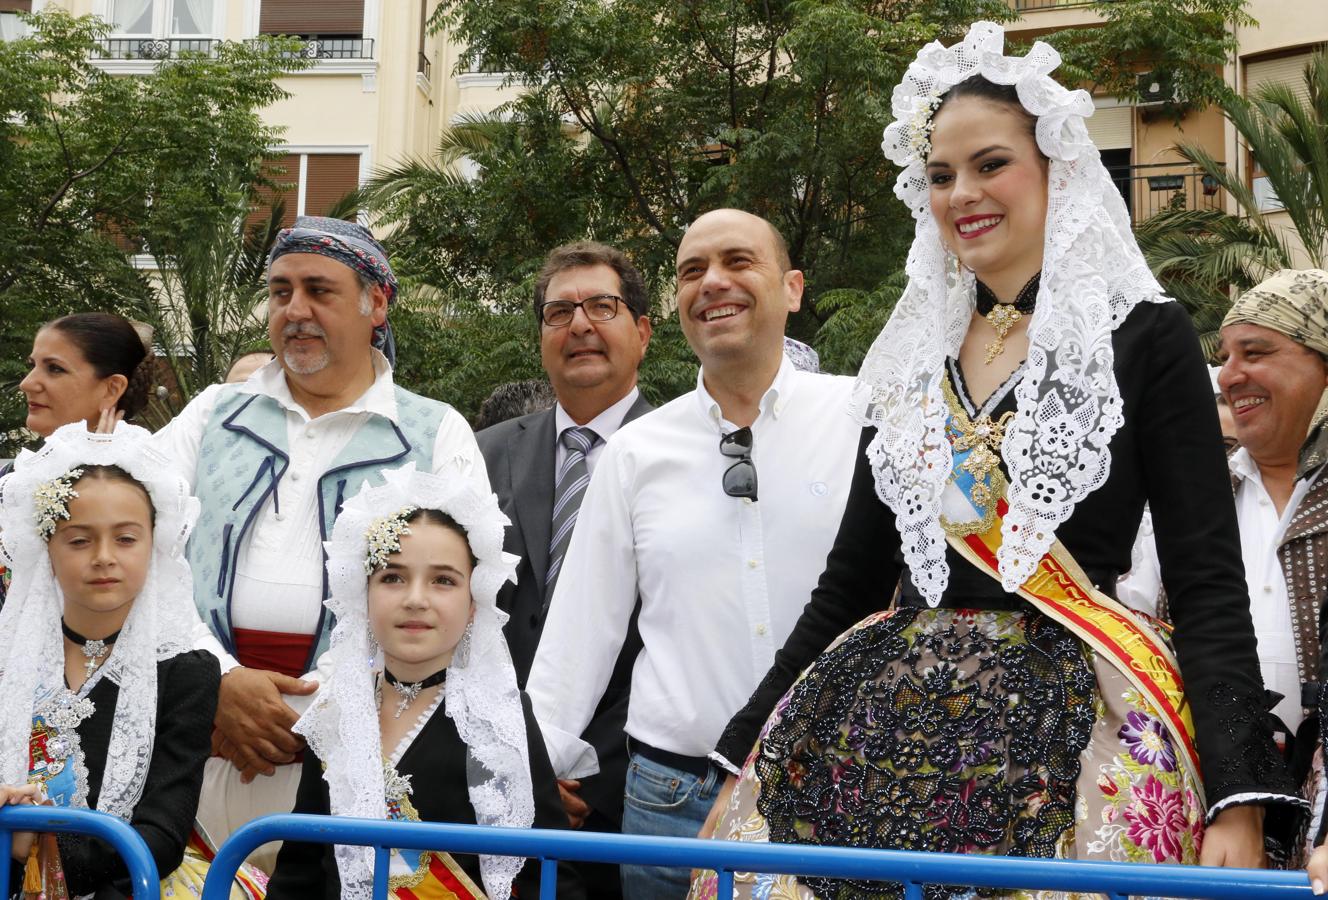 Mascletà de las fiestas de Hogueras de Alicante